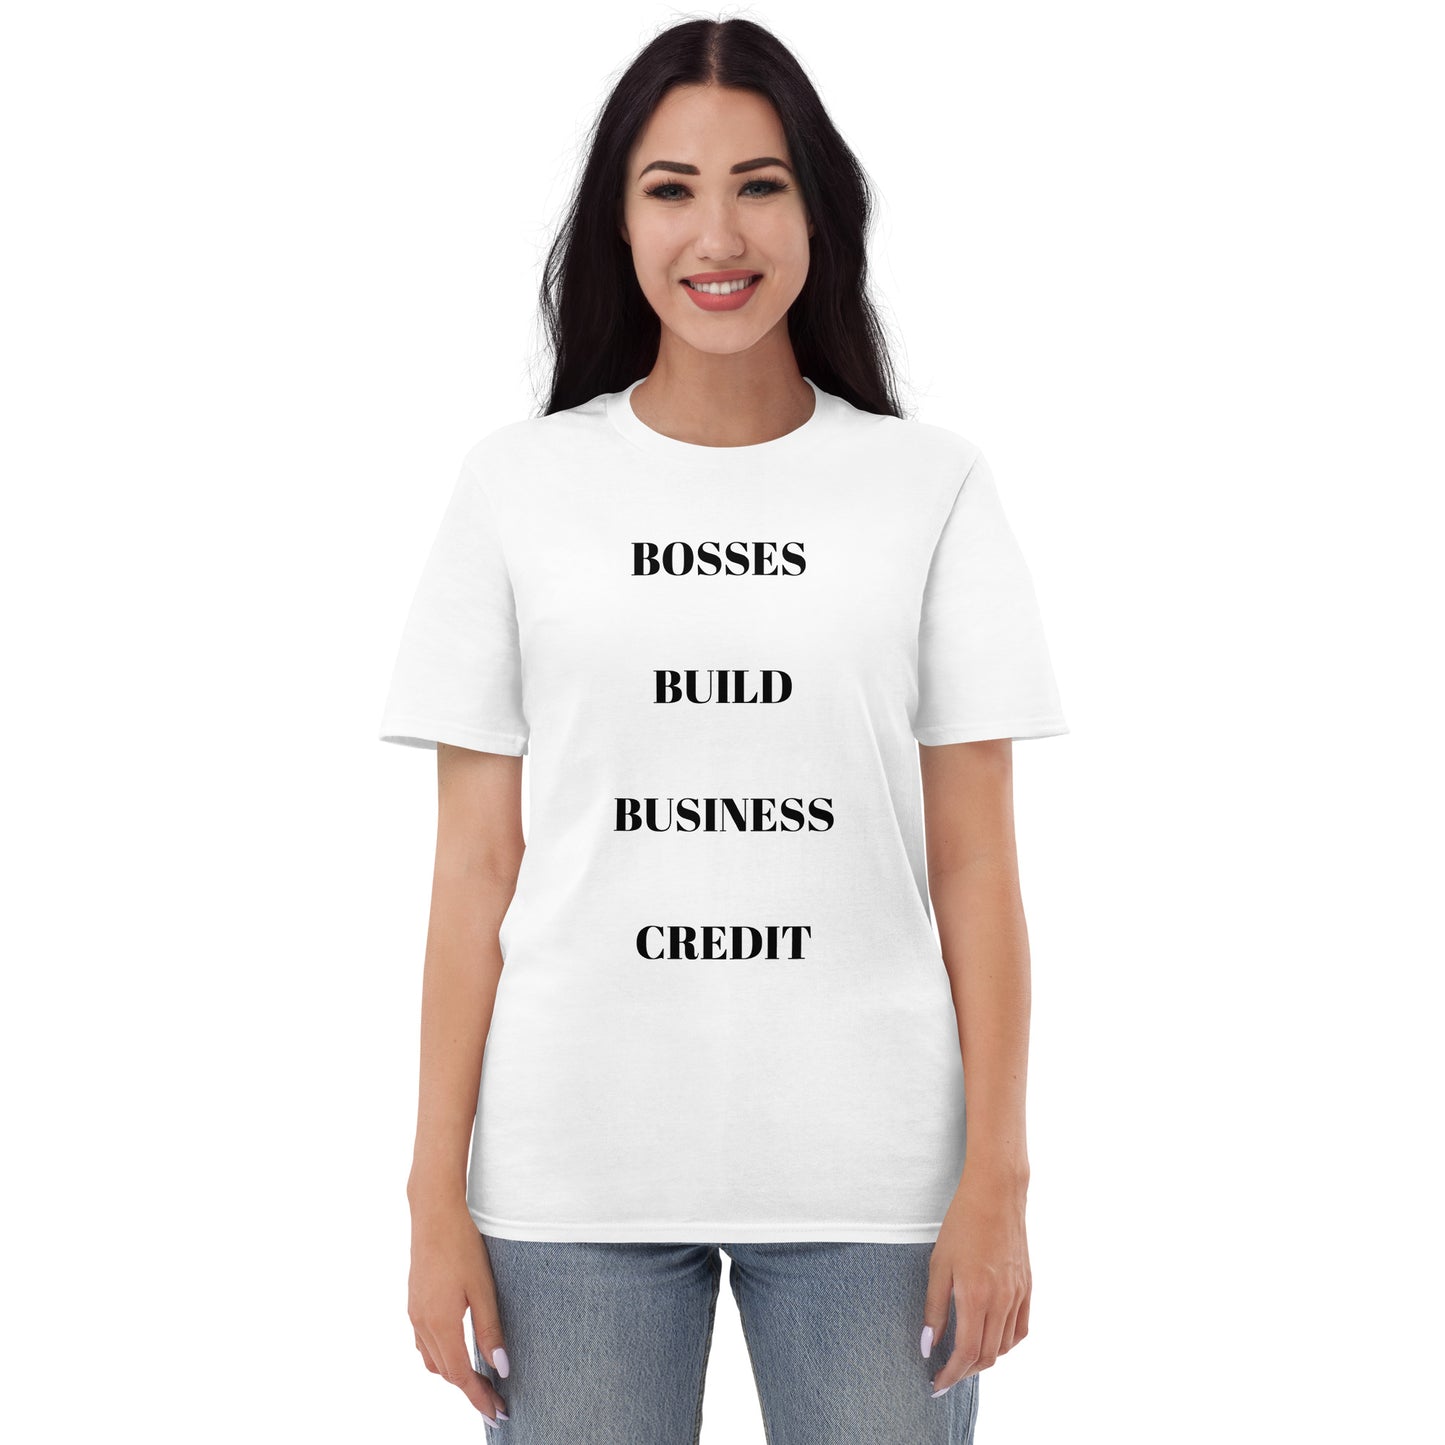 Bosses Build Business Credit Short-Sleeve T-Shirt